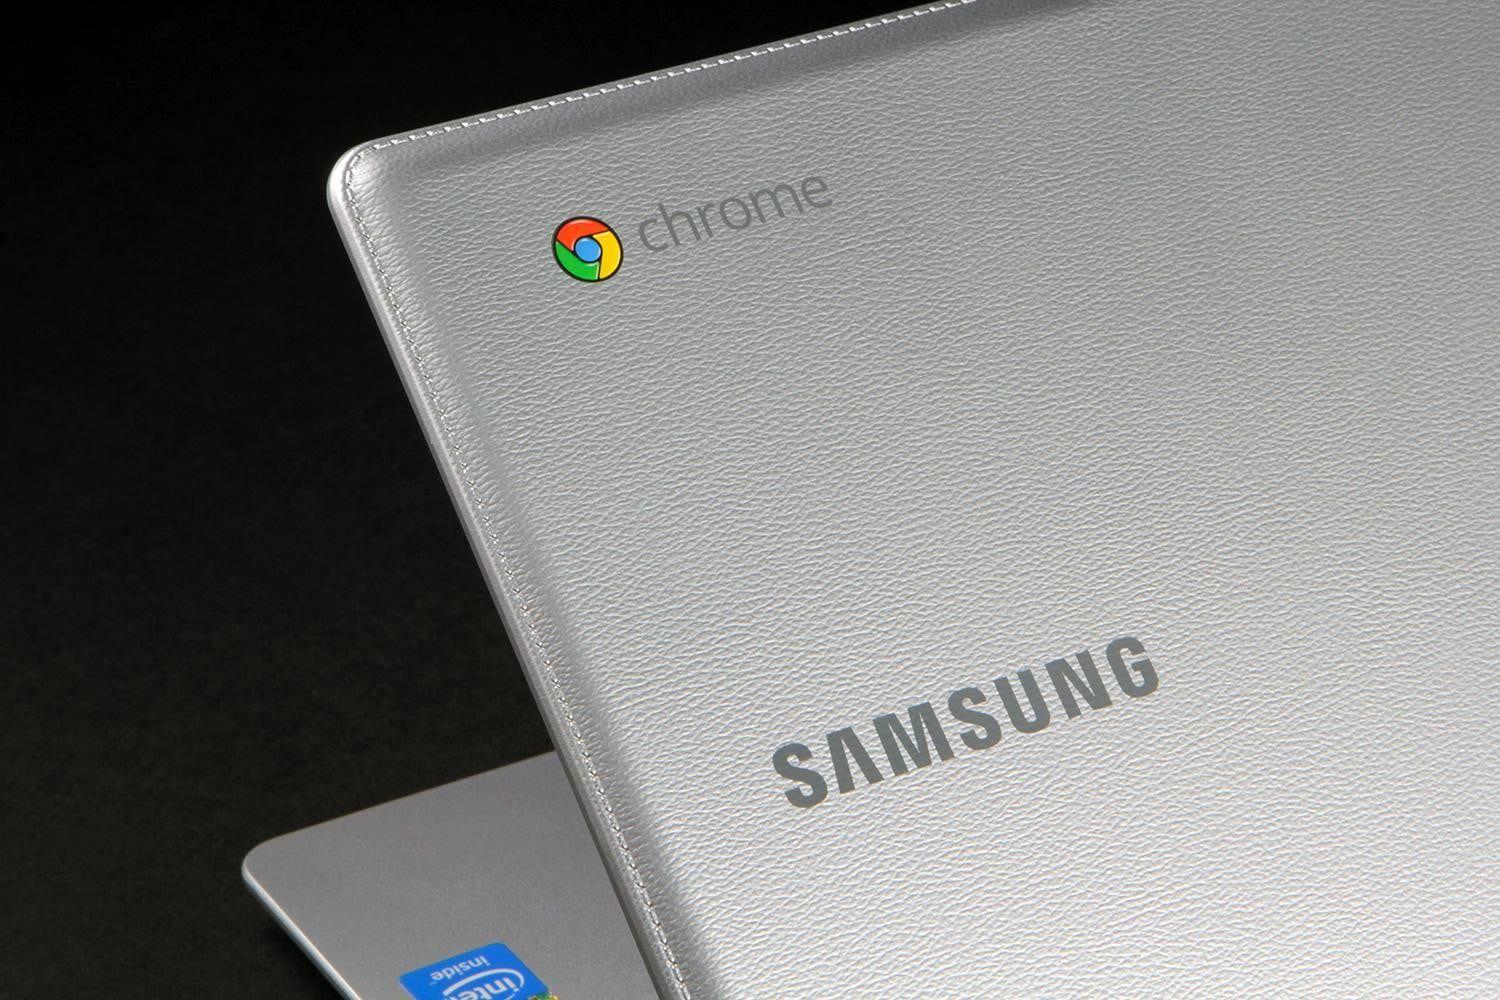 Samsung Chromebook Logo - Google Says Chromebooks Lead K-12 Education Sales | Digital Trends